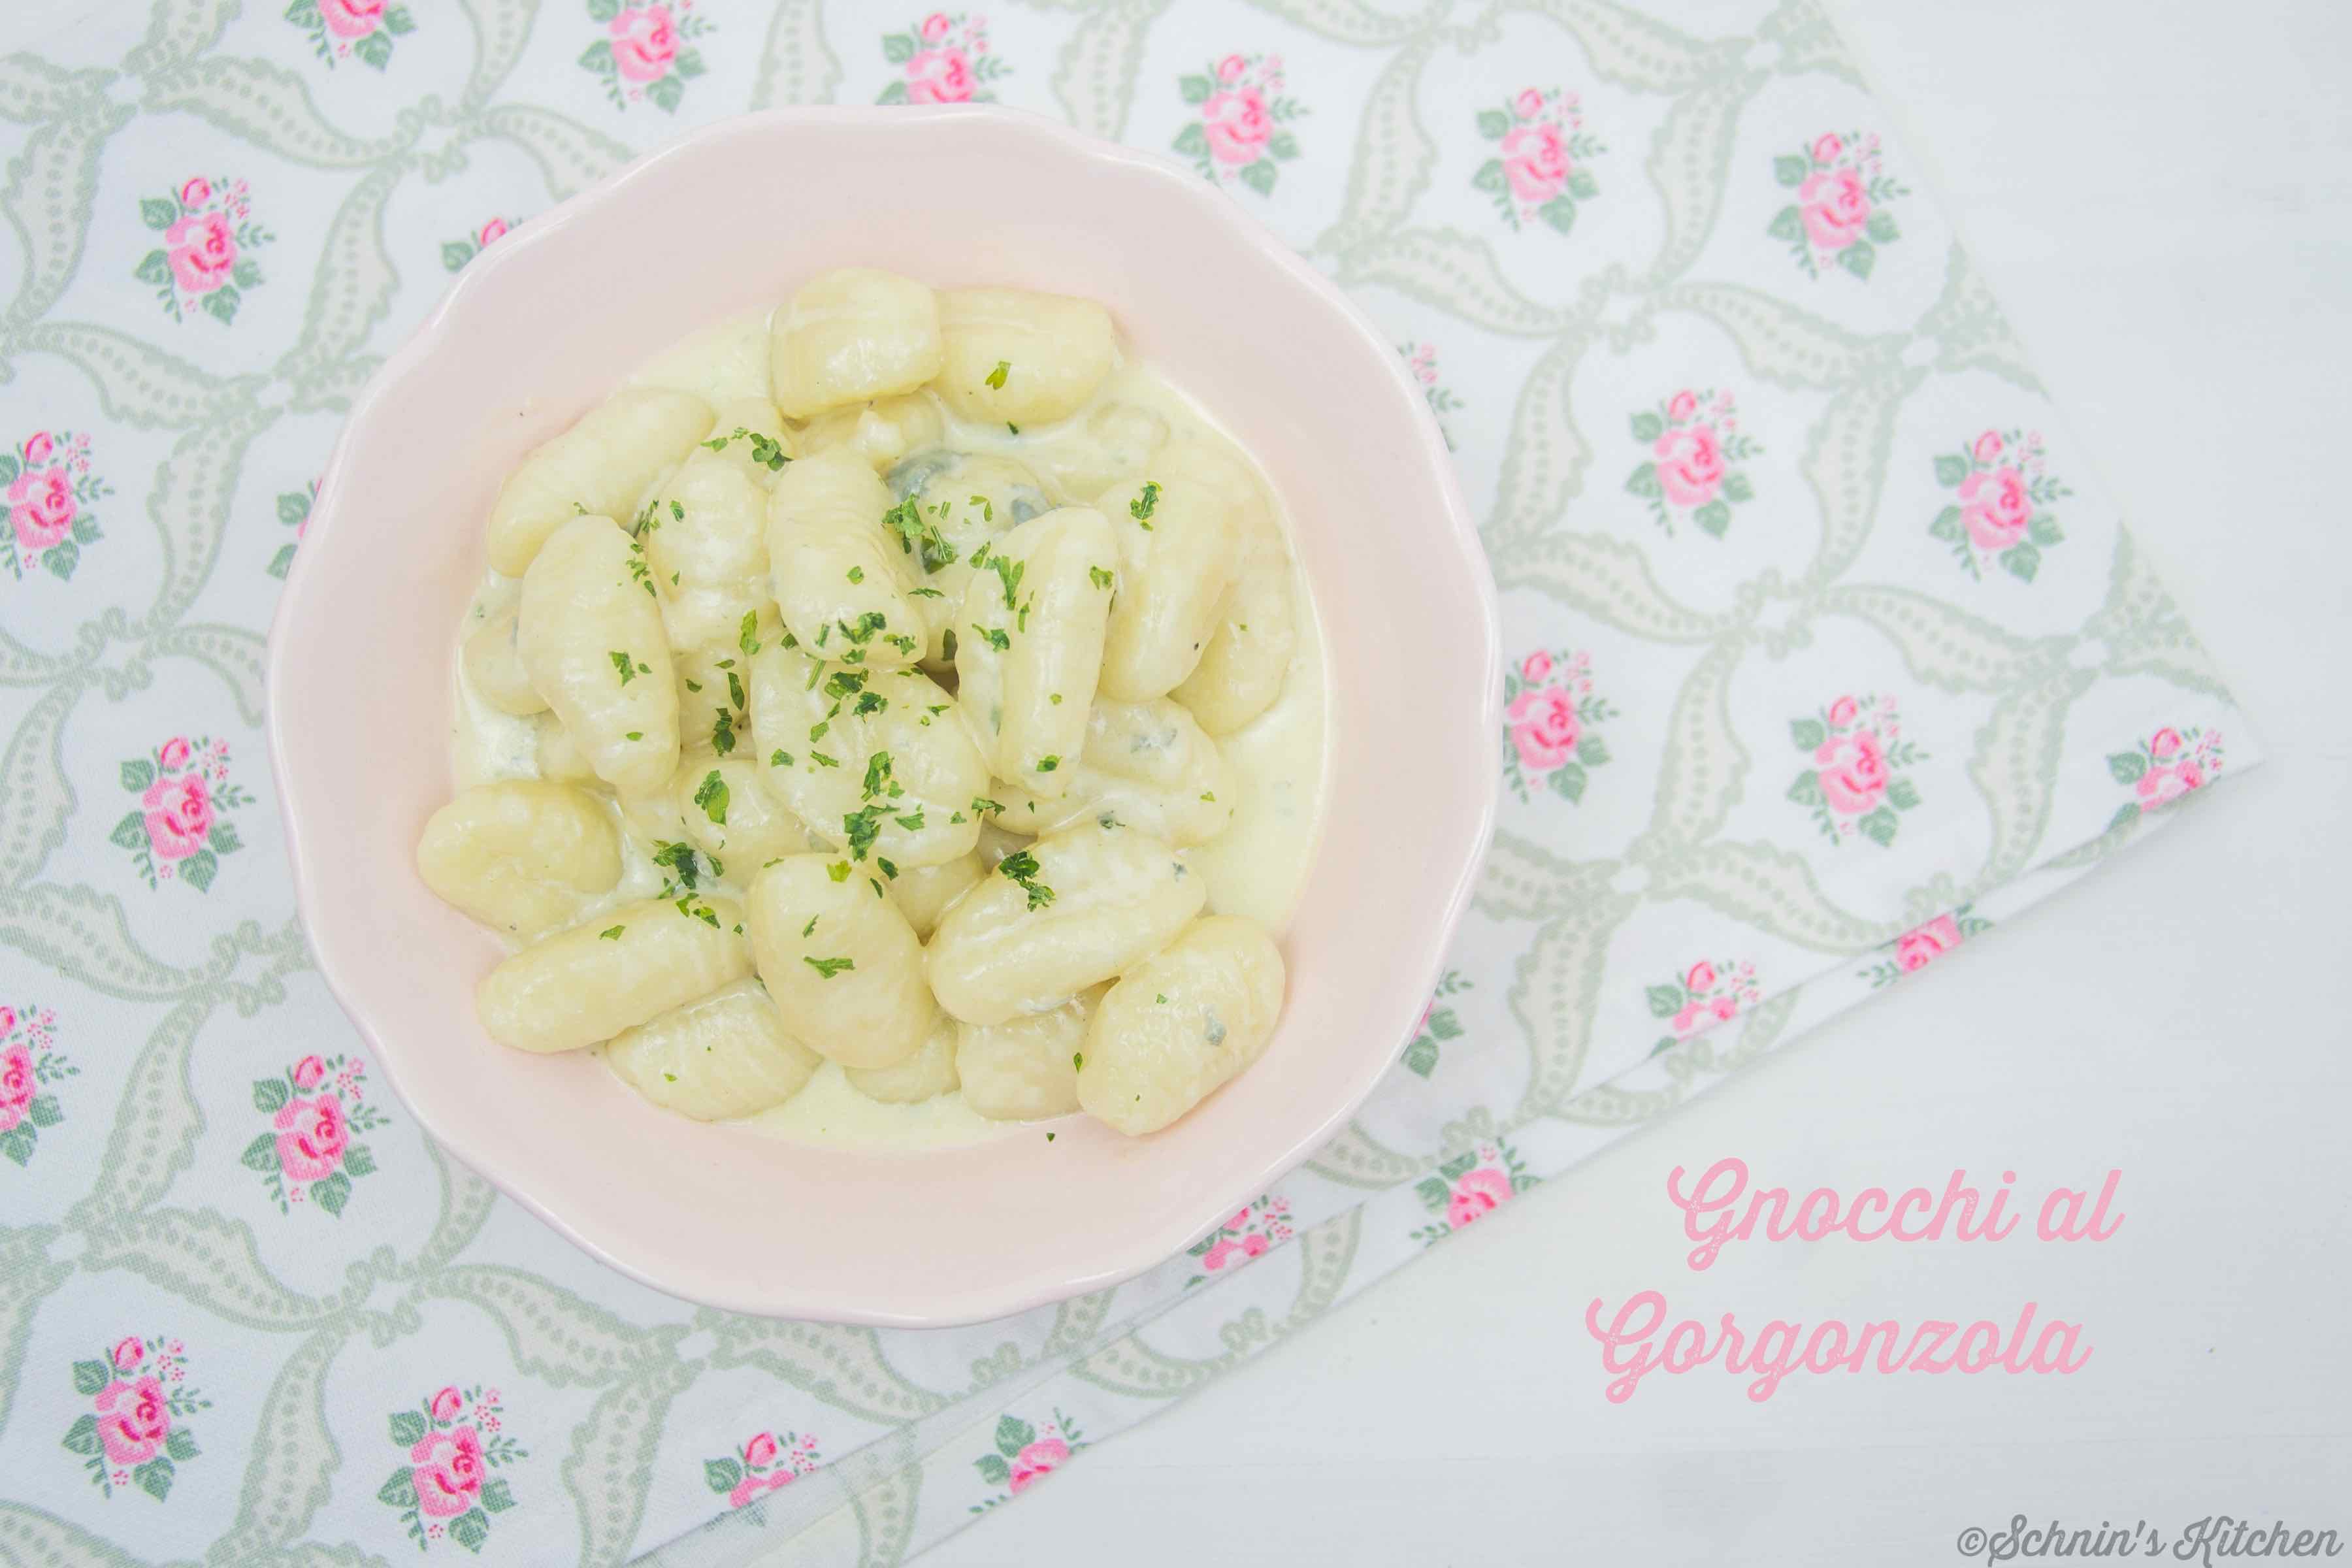 Schnin's Kitchen: Gnocchi al Gorgonzola